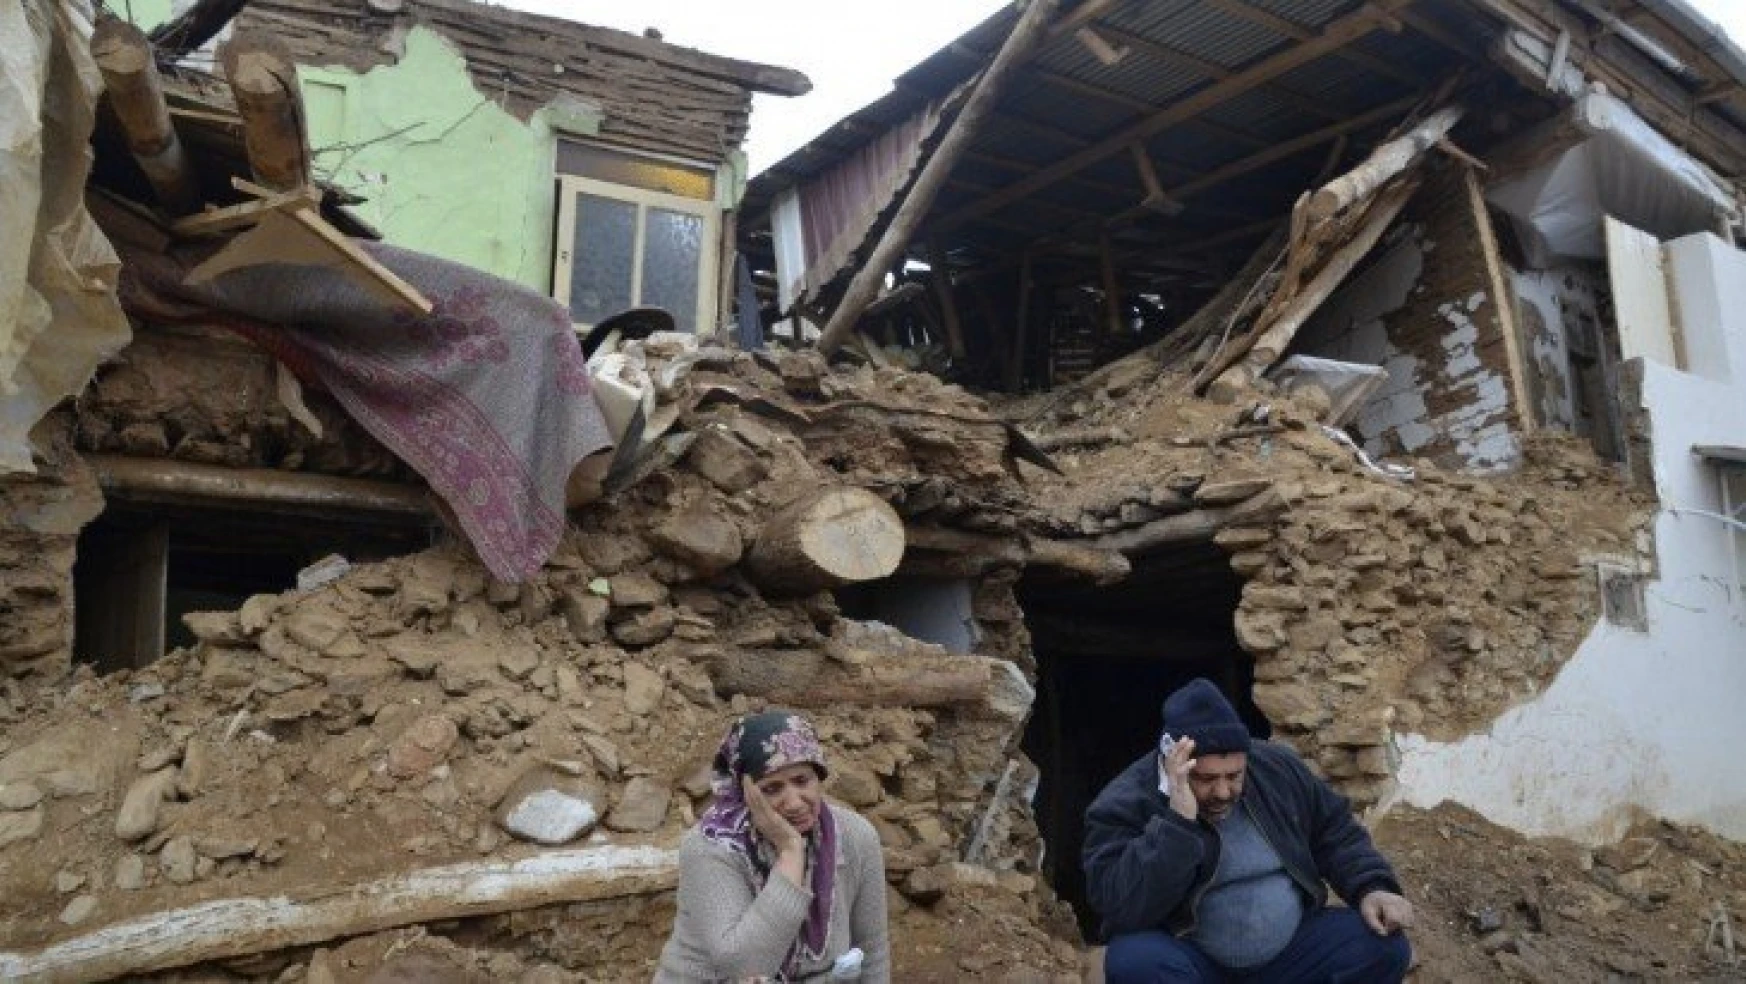 Malatya'de 24 saatte 14 deprem